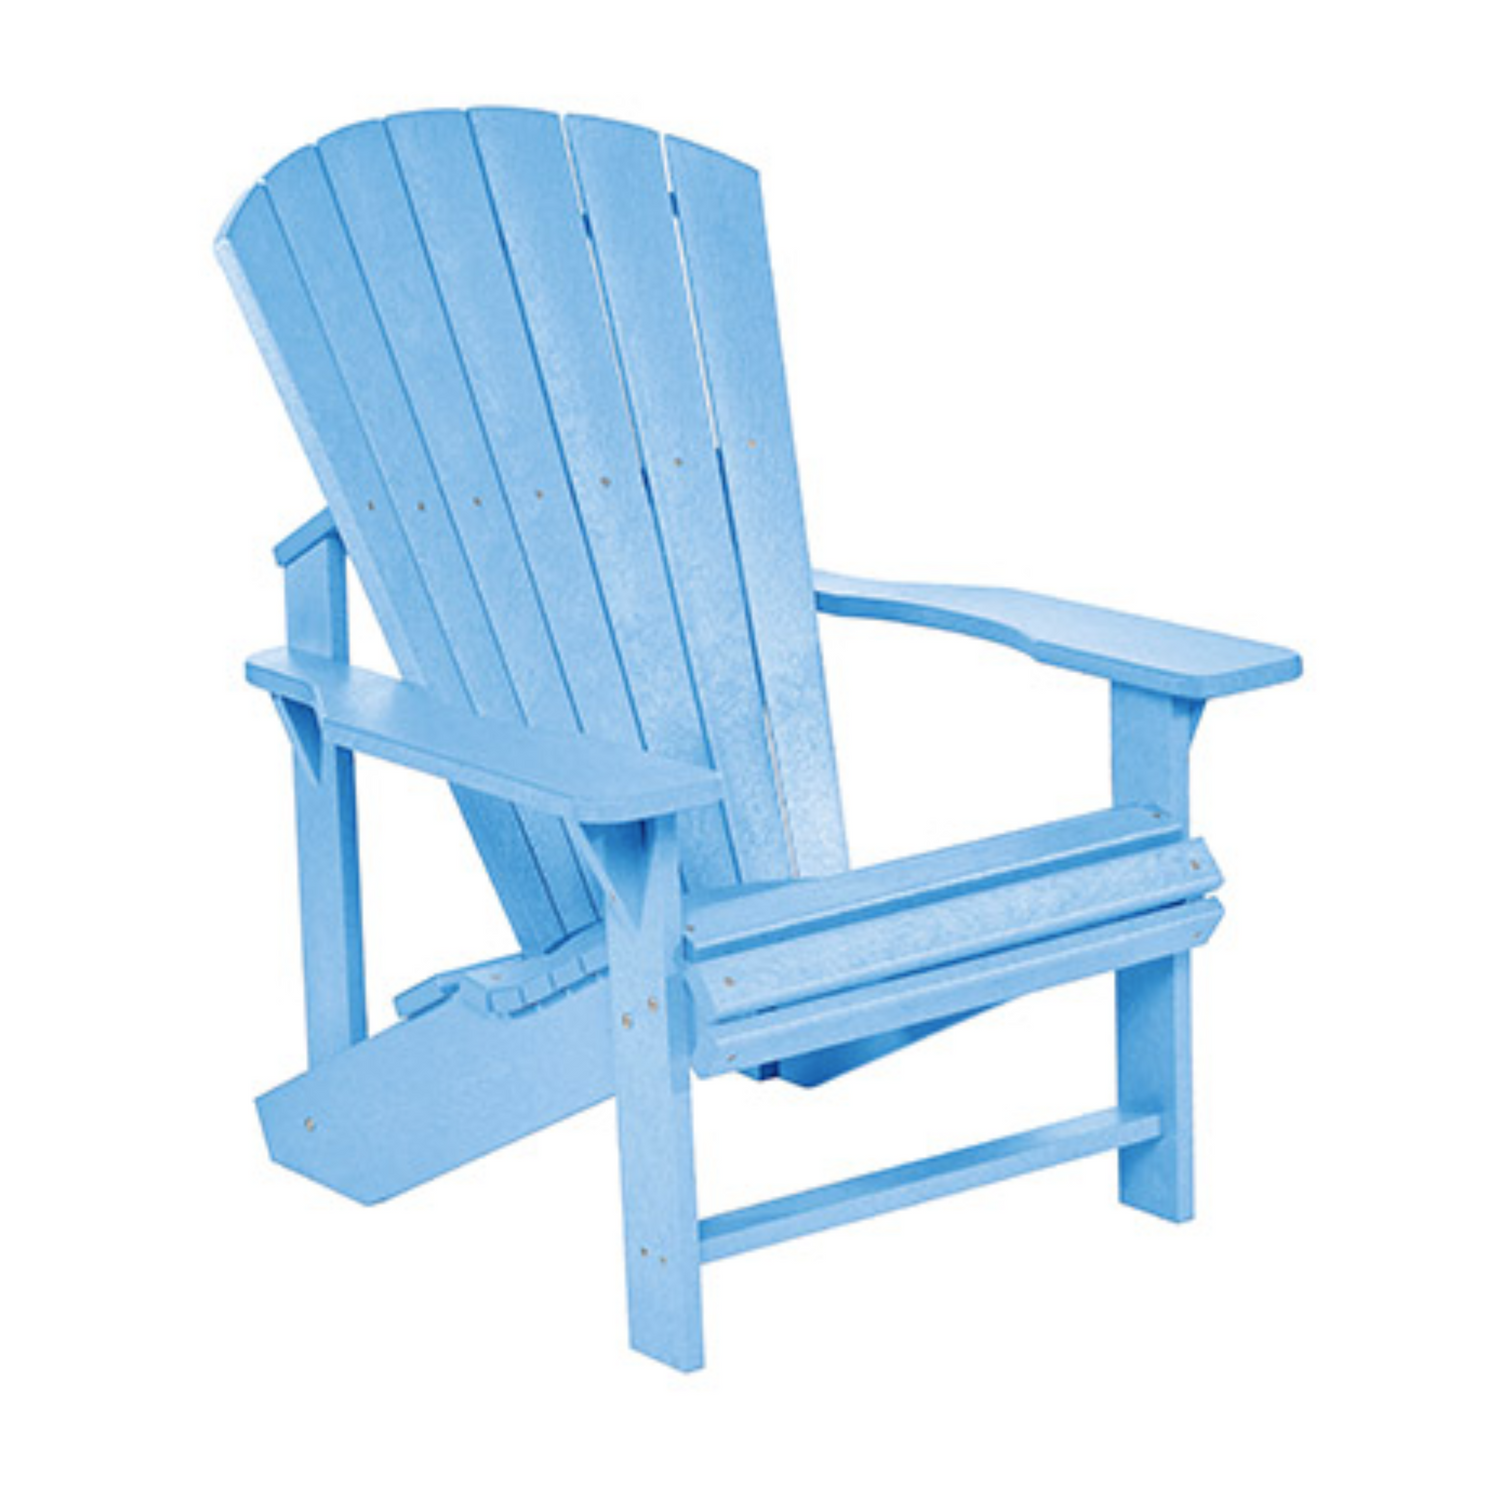 C.R.P. Upright Adirondack Chair In Sky Blue